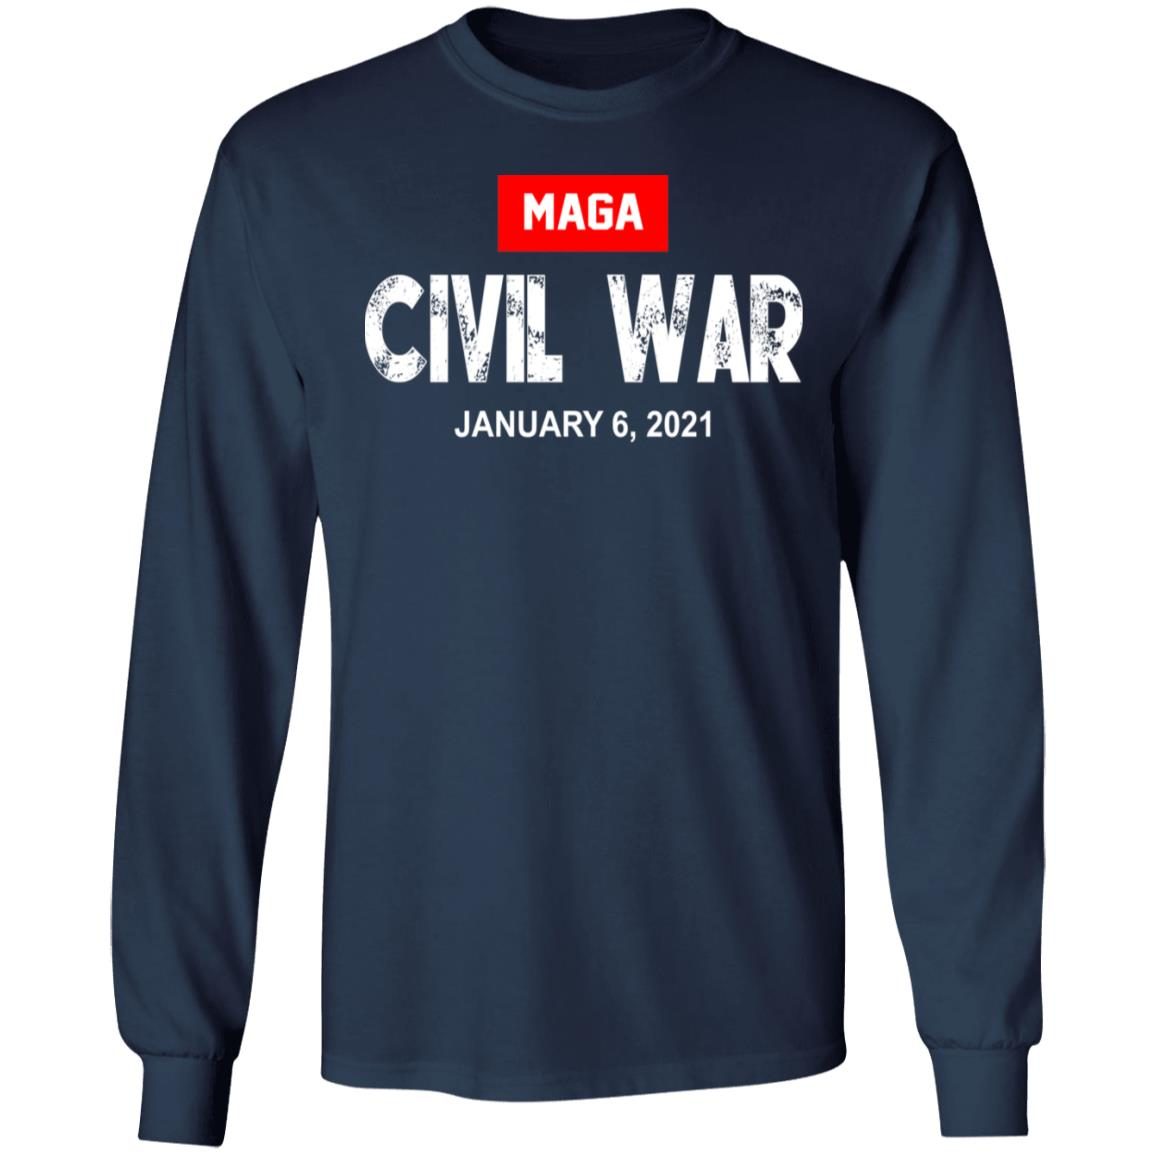 Maga Civil War January 6-2021 shirt